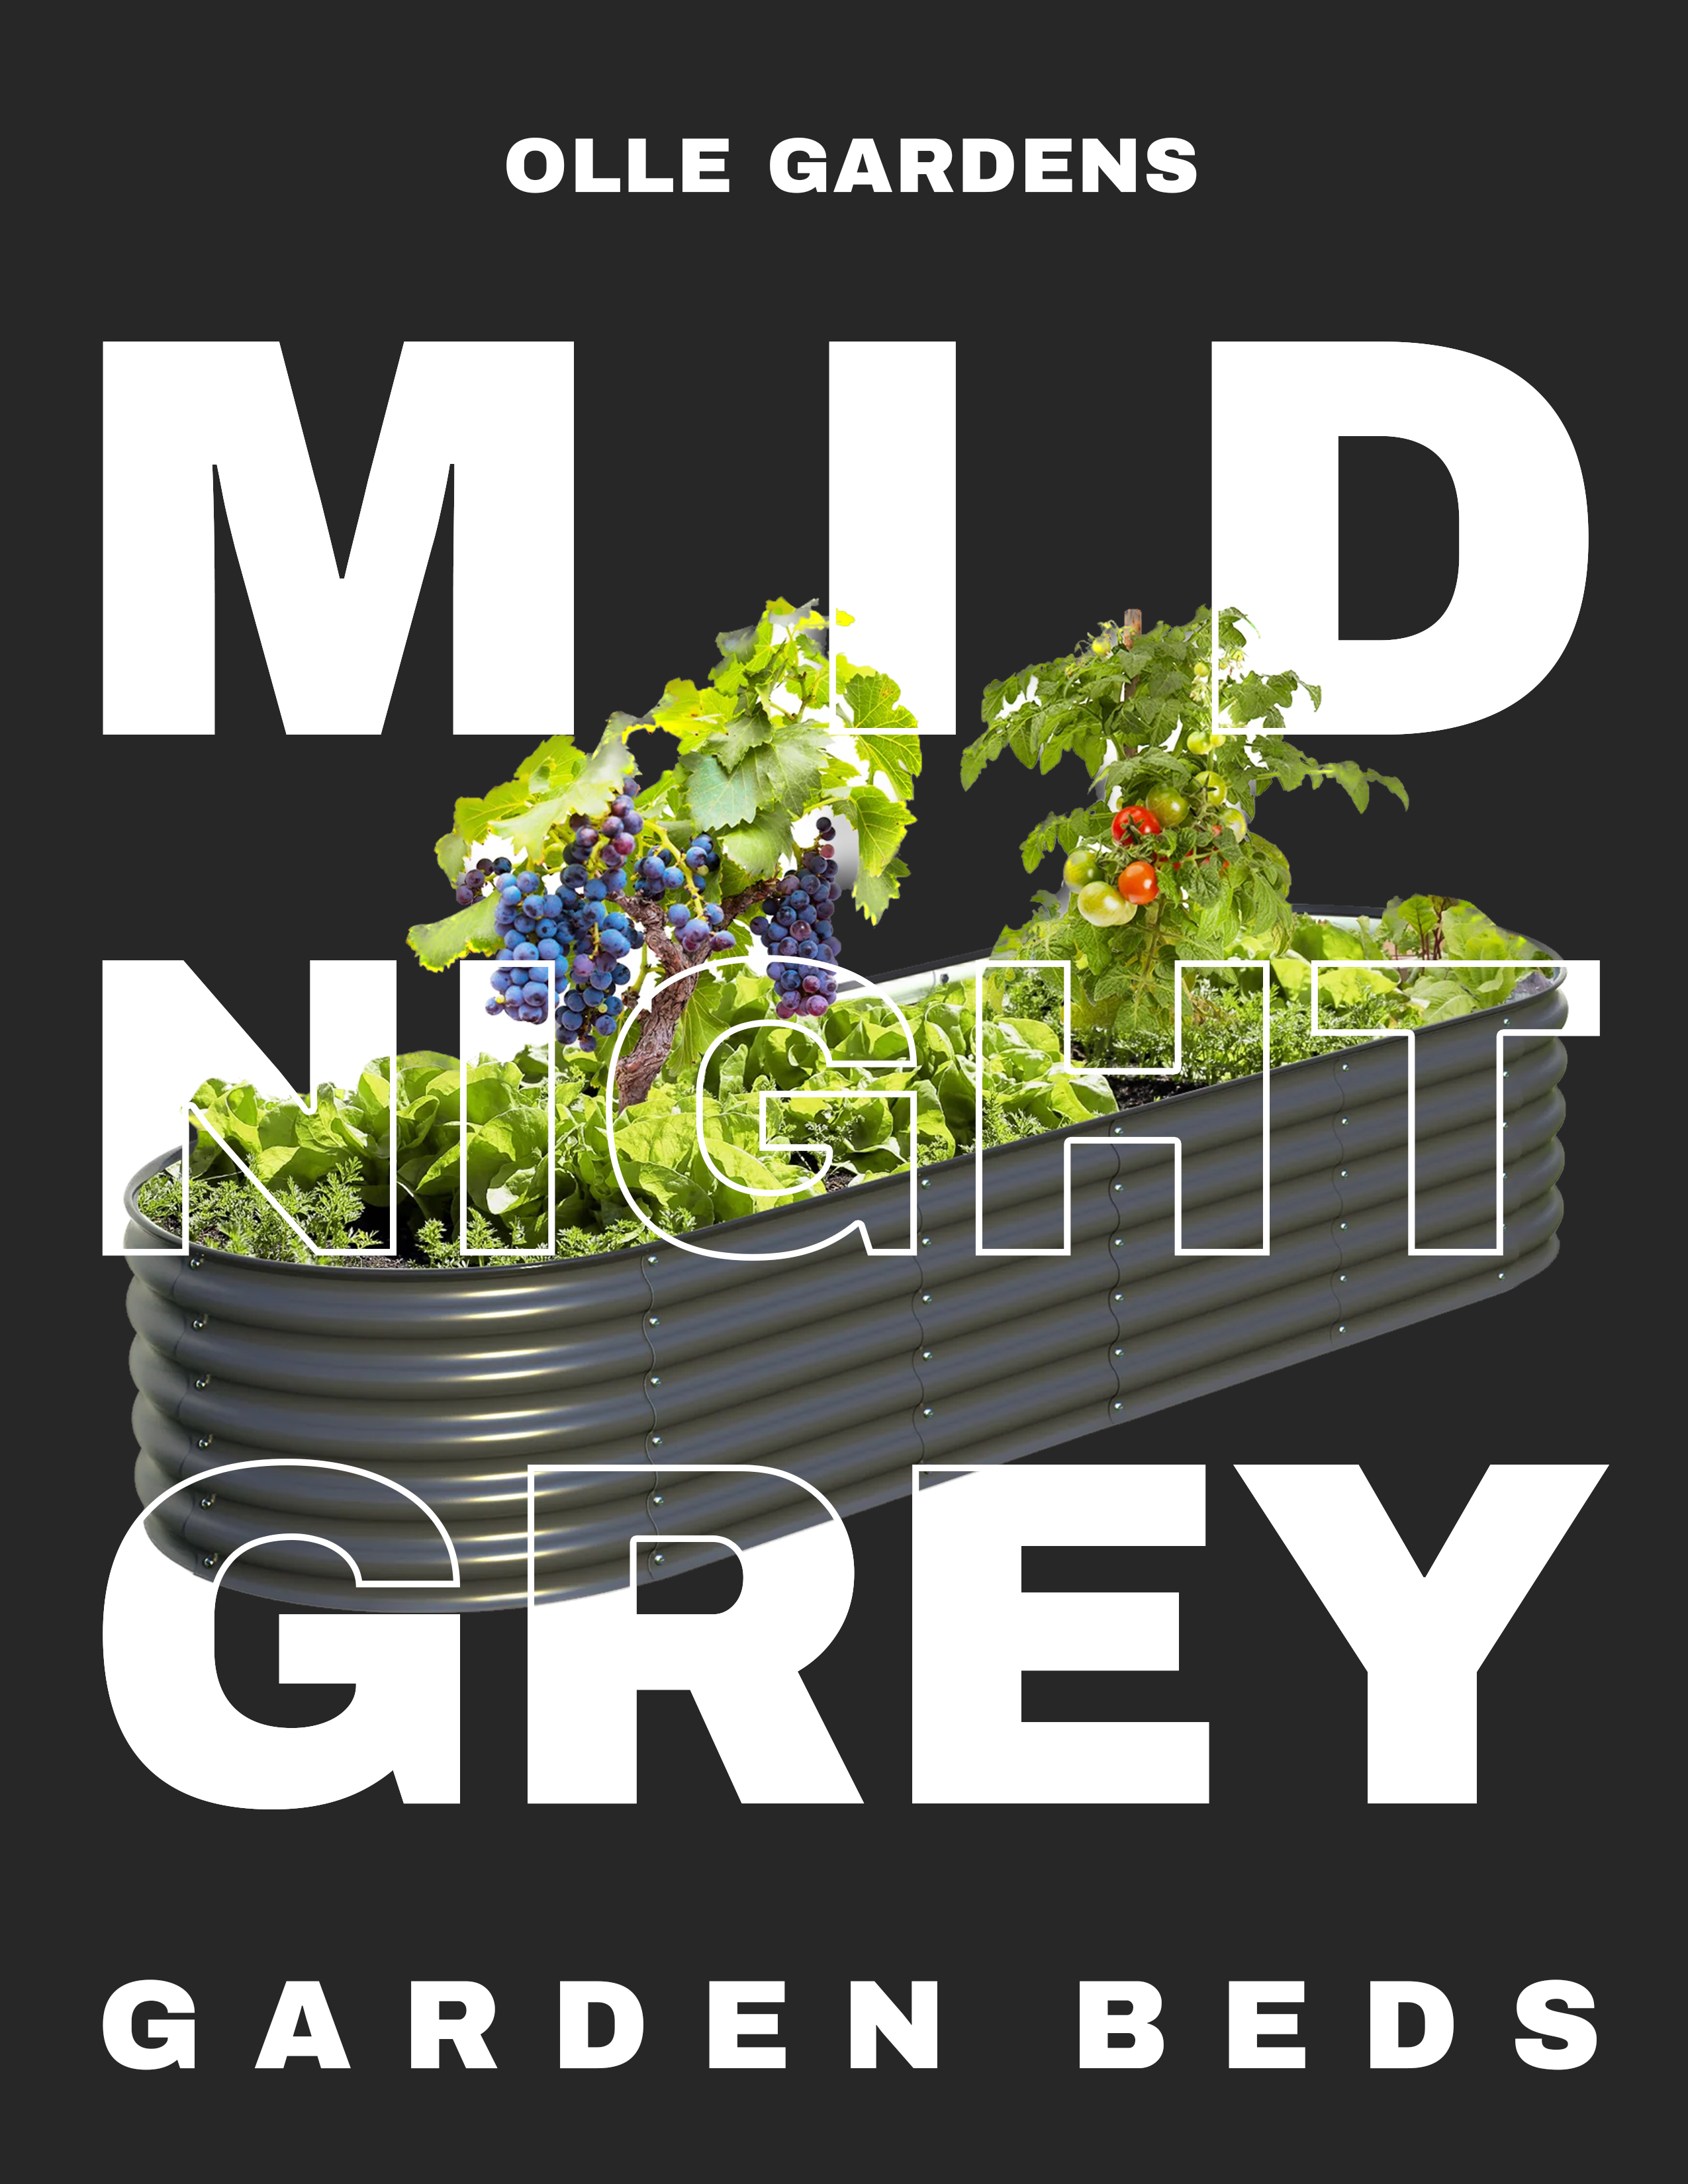 Midnight Grey